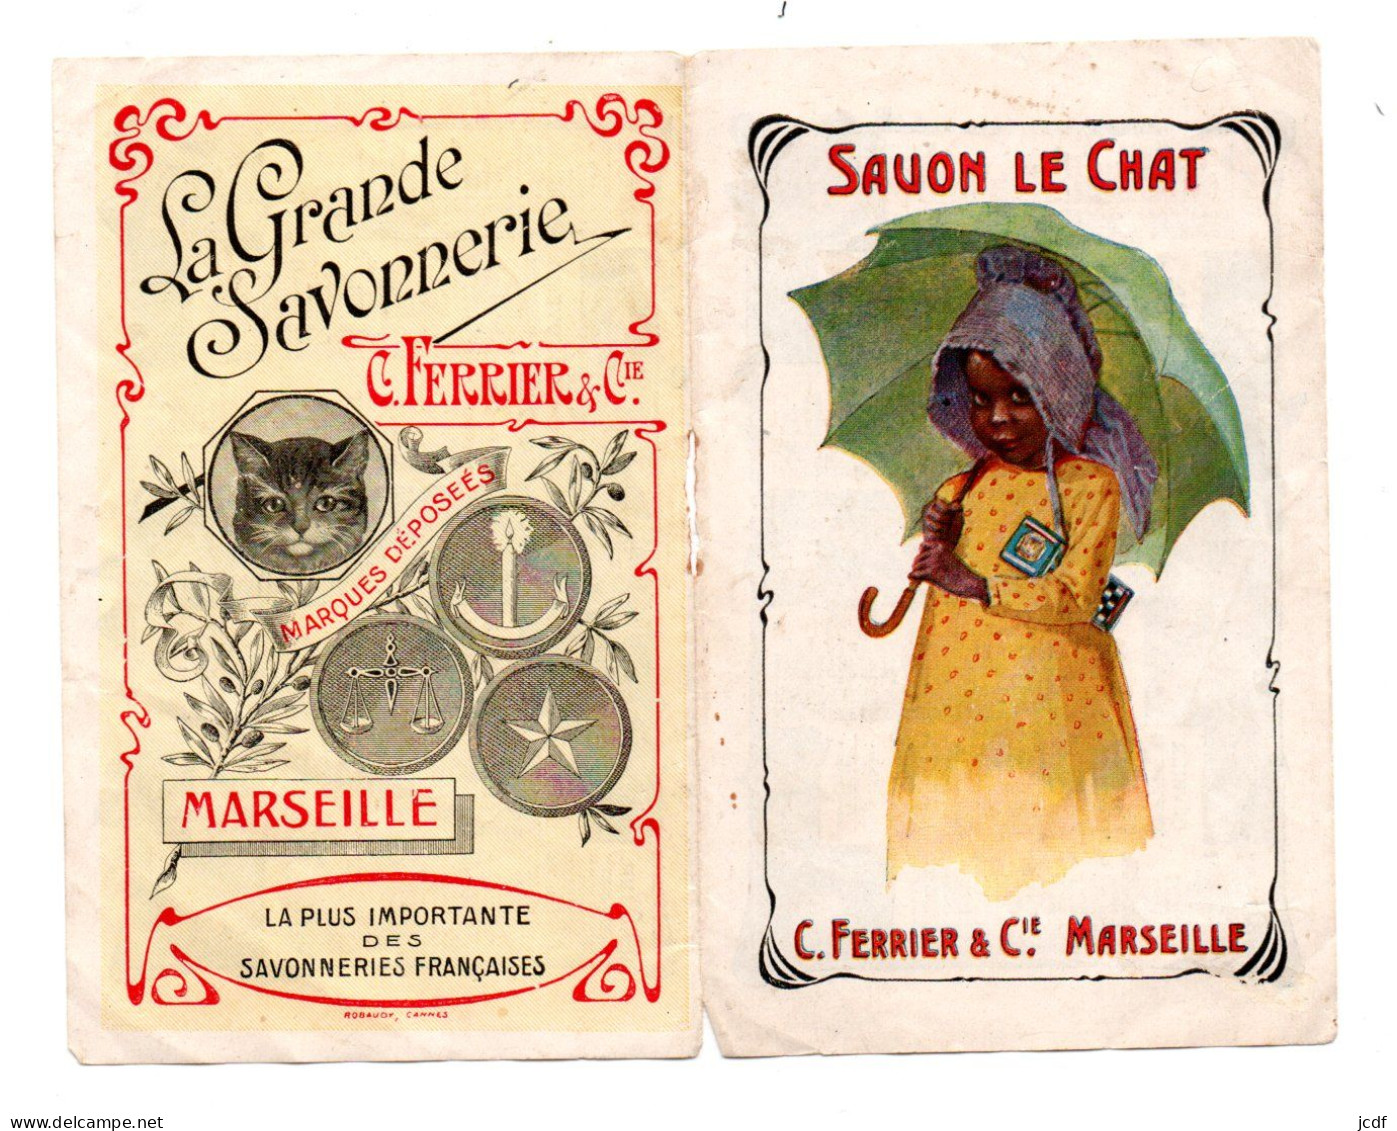 13 MARSEILLE - La Grande Savonnerie Ferrier - Savon Le Chat - Calendrier 1910 - Small : 1901-20